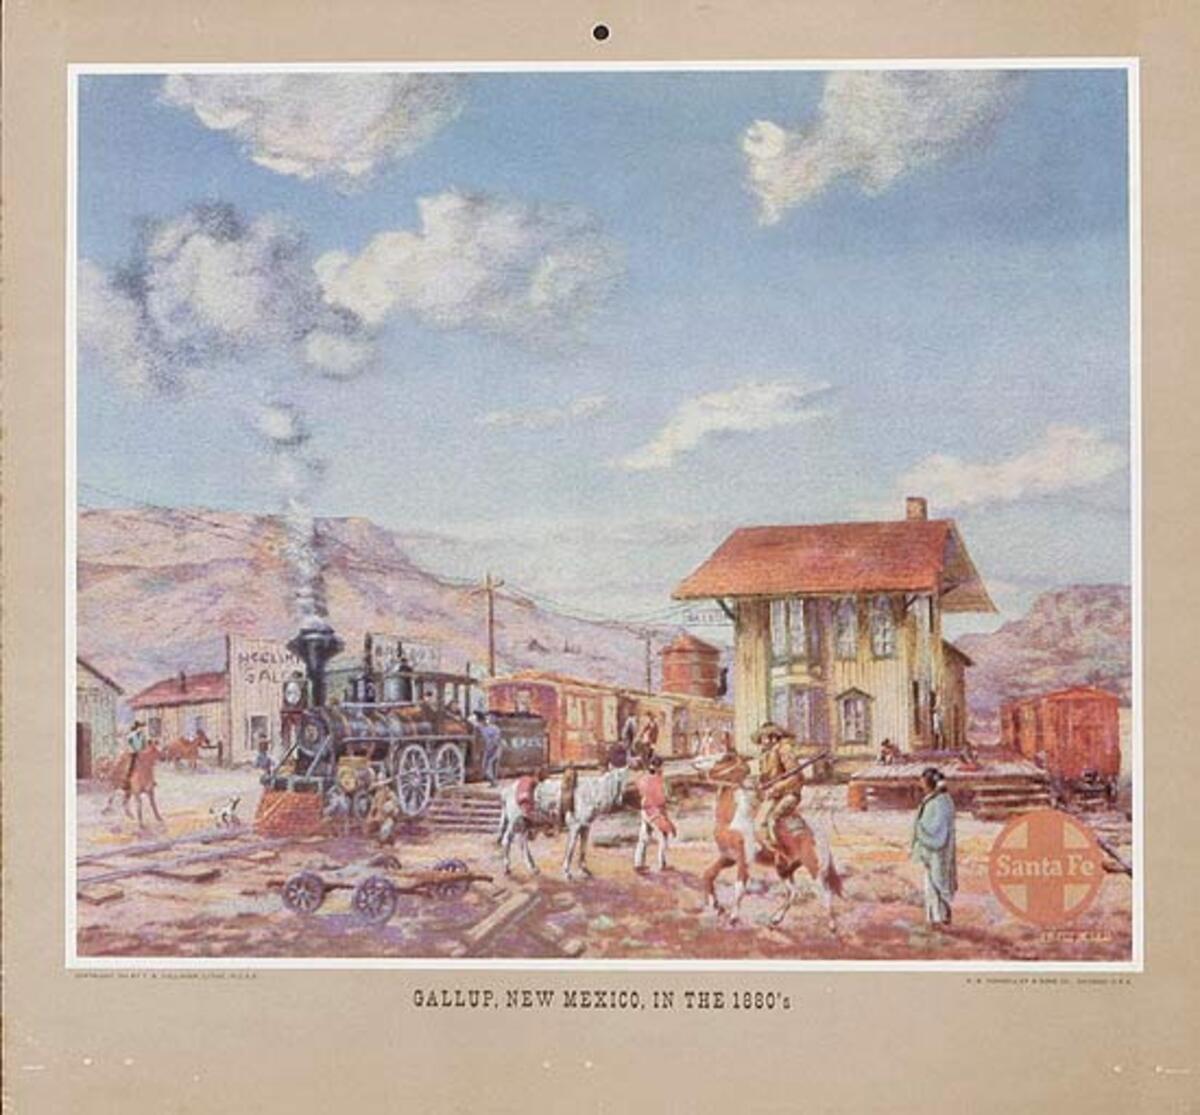 Gallup New Mexico, In The 1880's Original Santa Fe Railroad Advertising Calendar